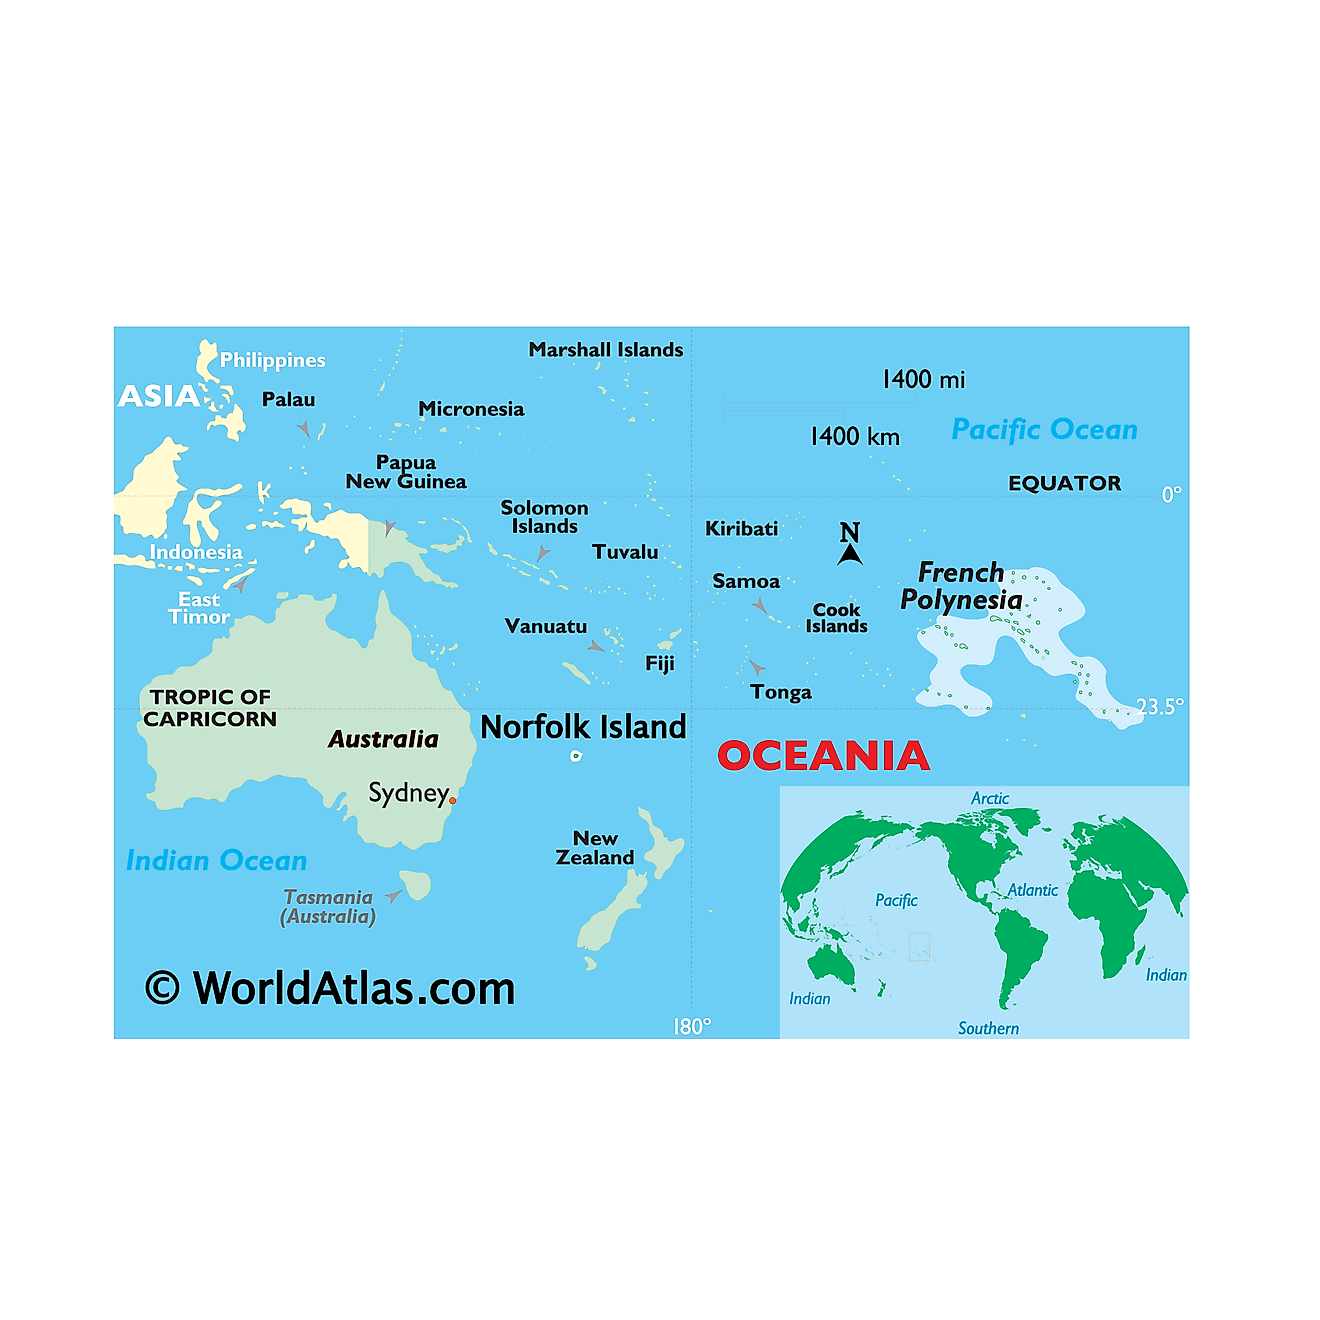 Where is French Polynesia?